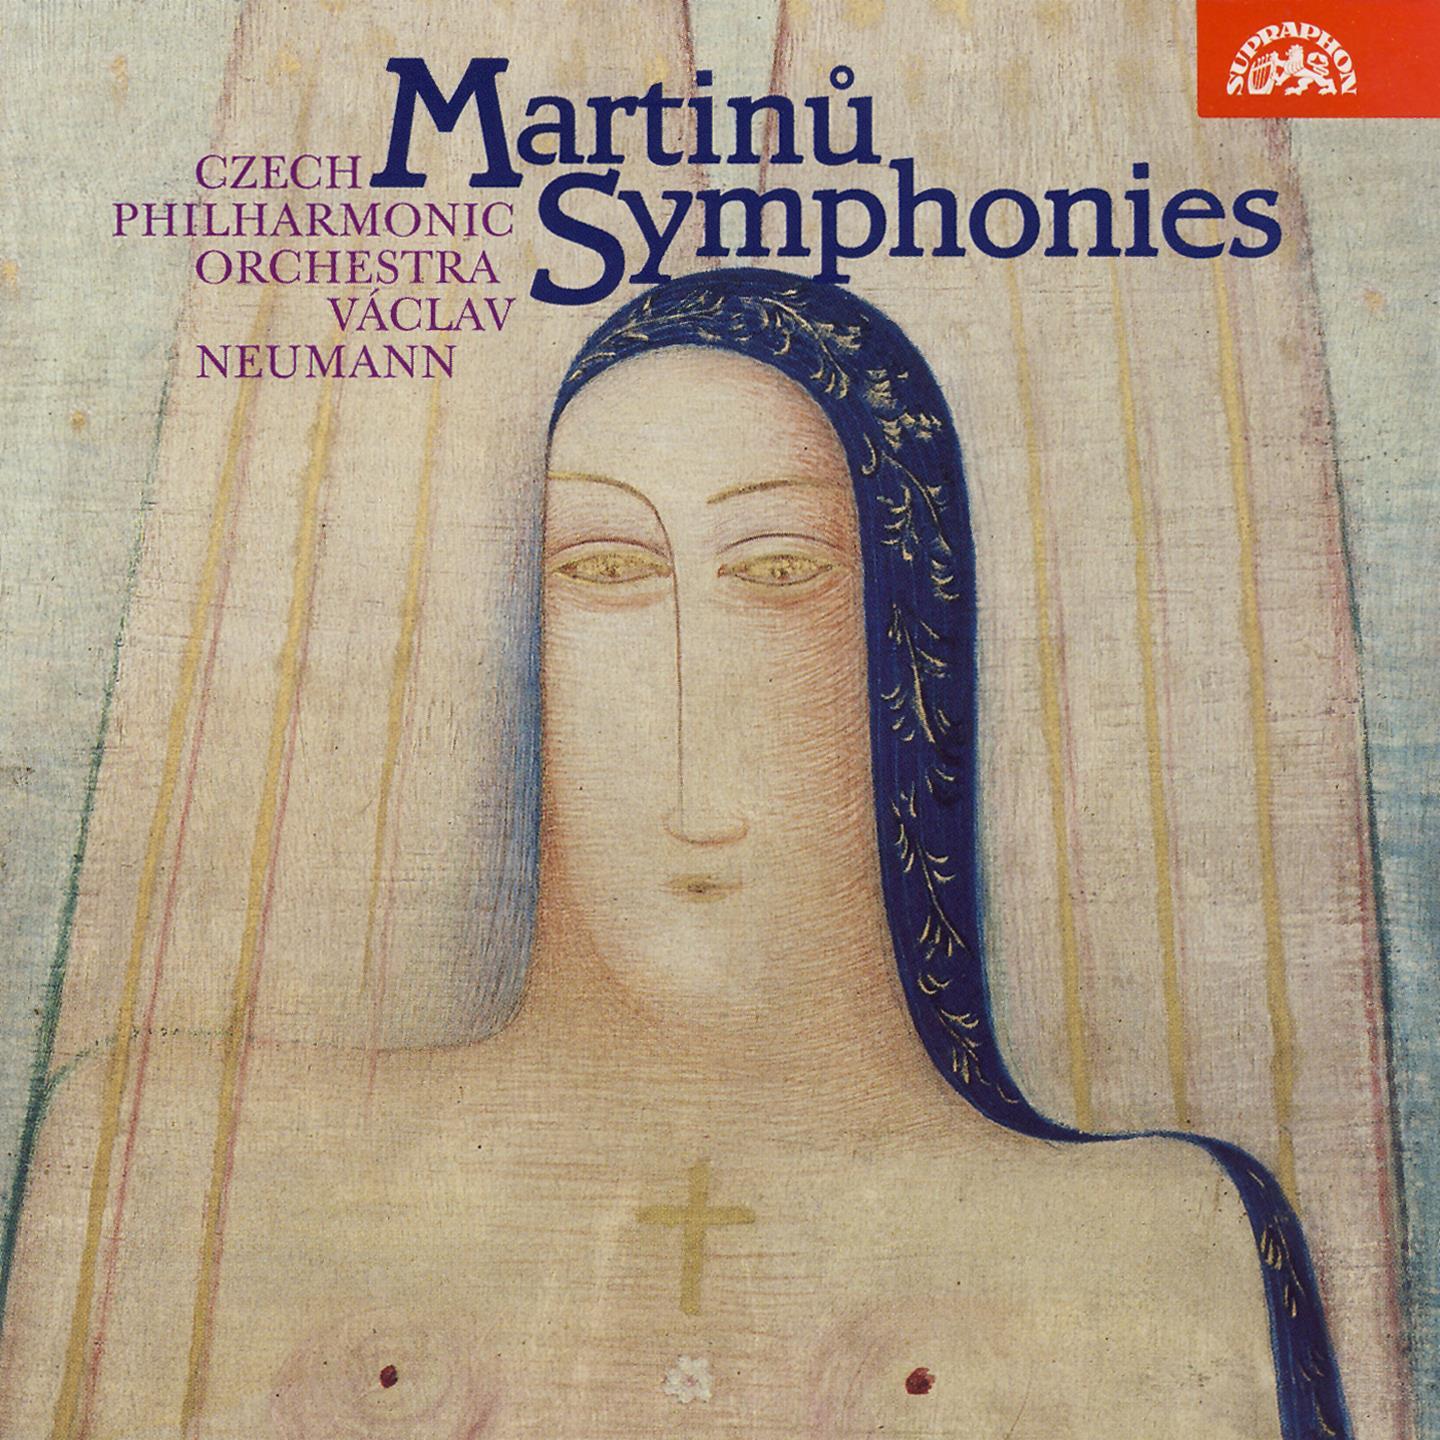 Symphony No. 6, H. 343 "Fantaisies symphoniques": I. Lento - Allegro